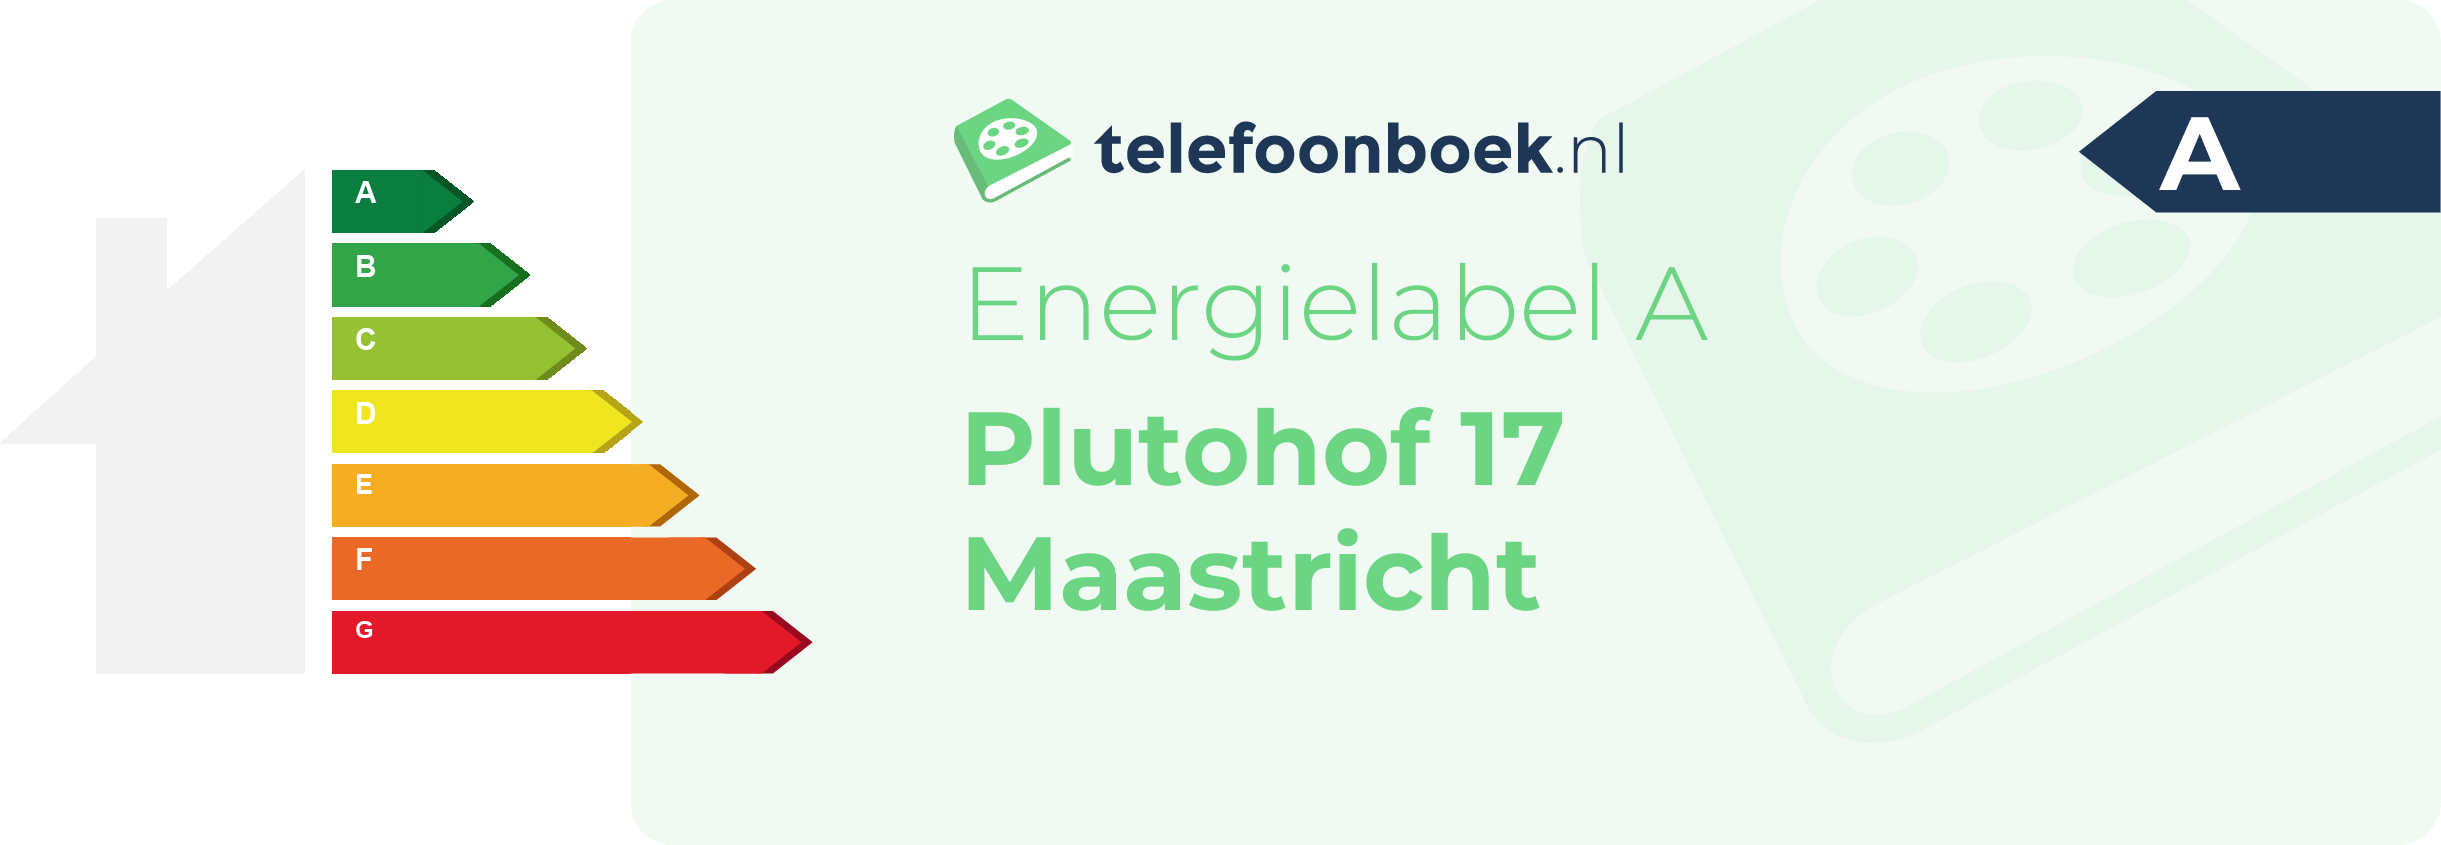 Energielabel Plutohof 17 Maastricht